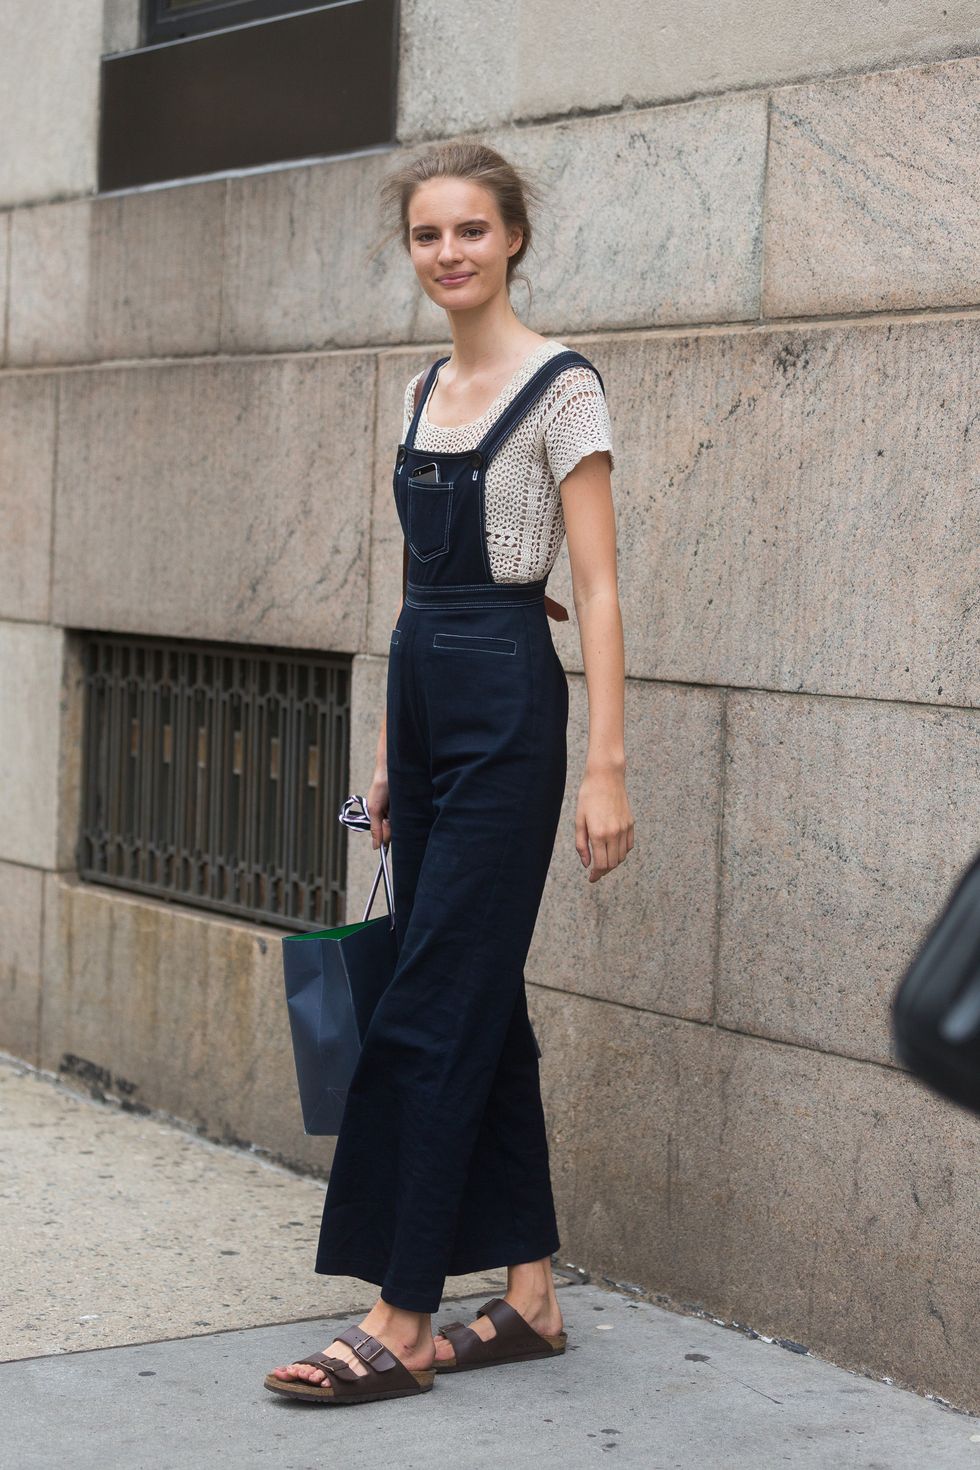 Street Style - Day 5 - New York Fashion Week Spring 2015